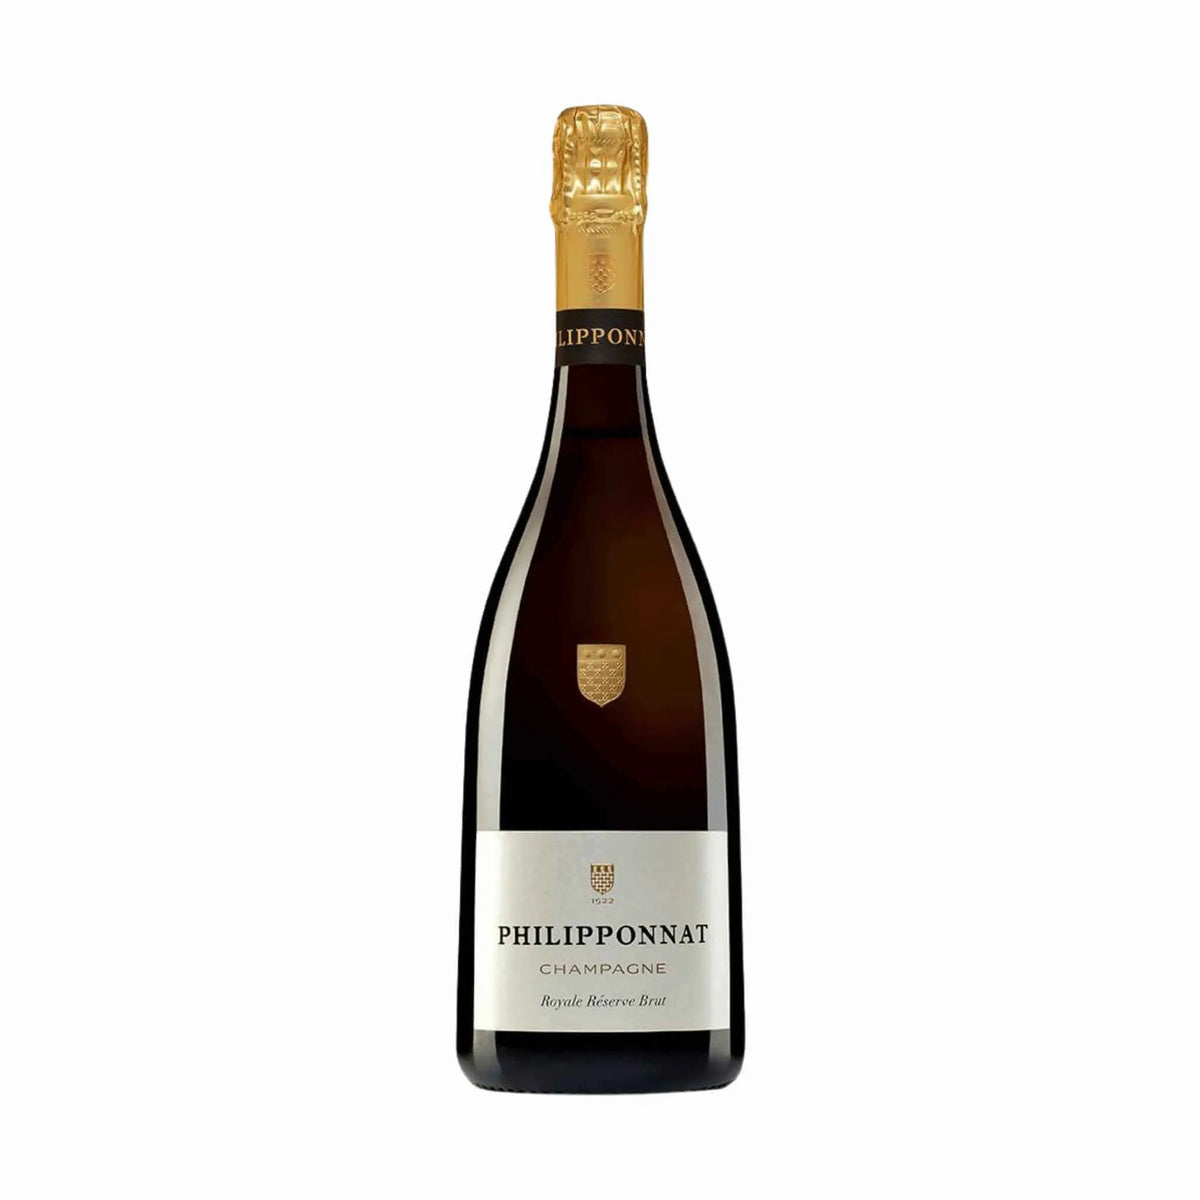 Philipponnat-Champagner-Pinot Noir, Chardonnay, Pinot Meunier-Royale Reserve Brut Halbflasche-WINECOM